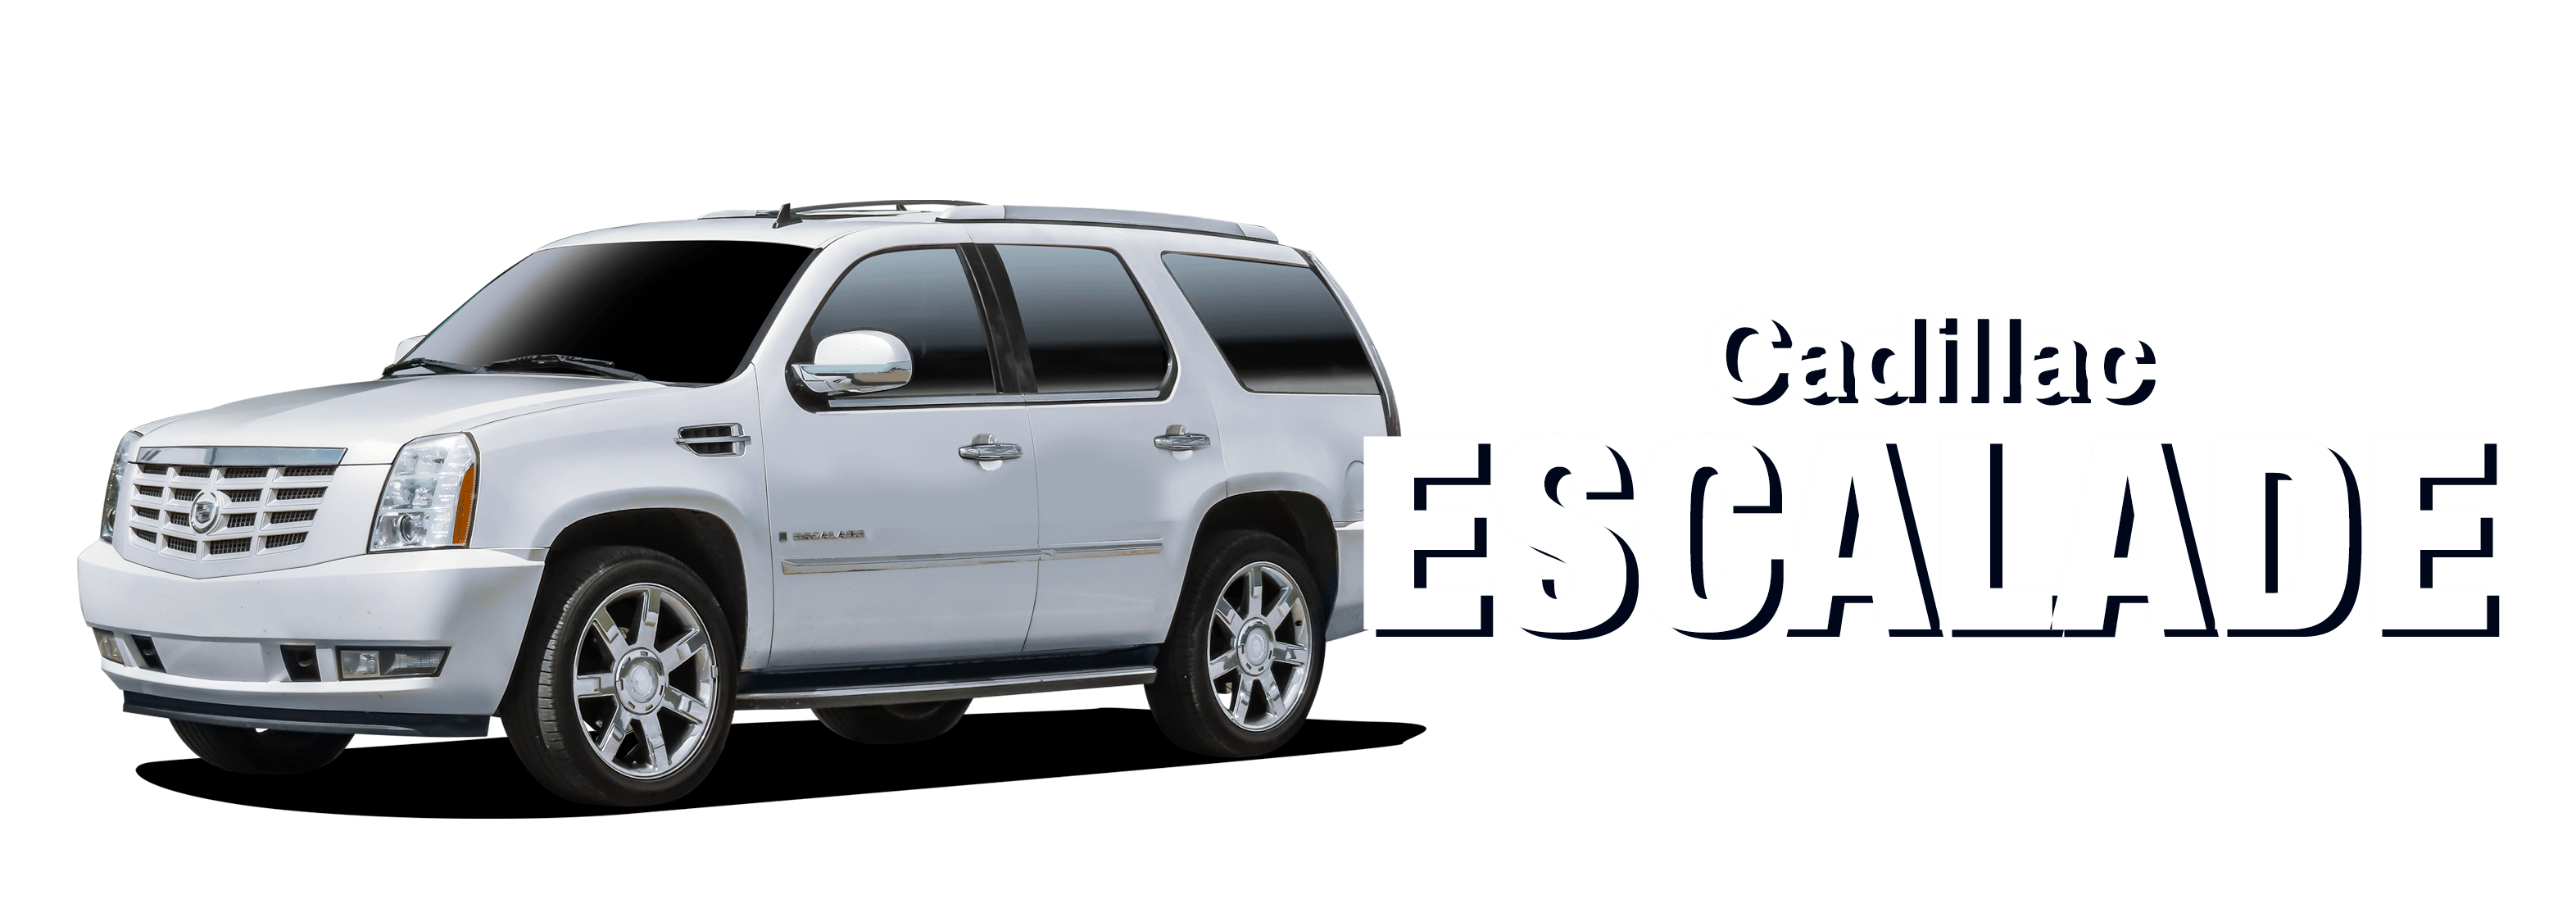 Cadillac-Escalade-vehicle-desktop